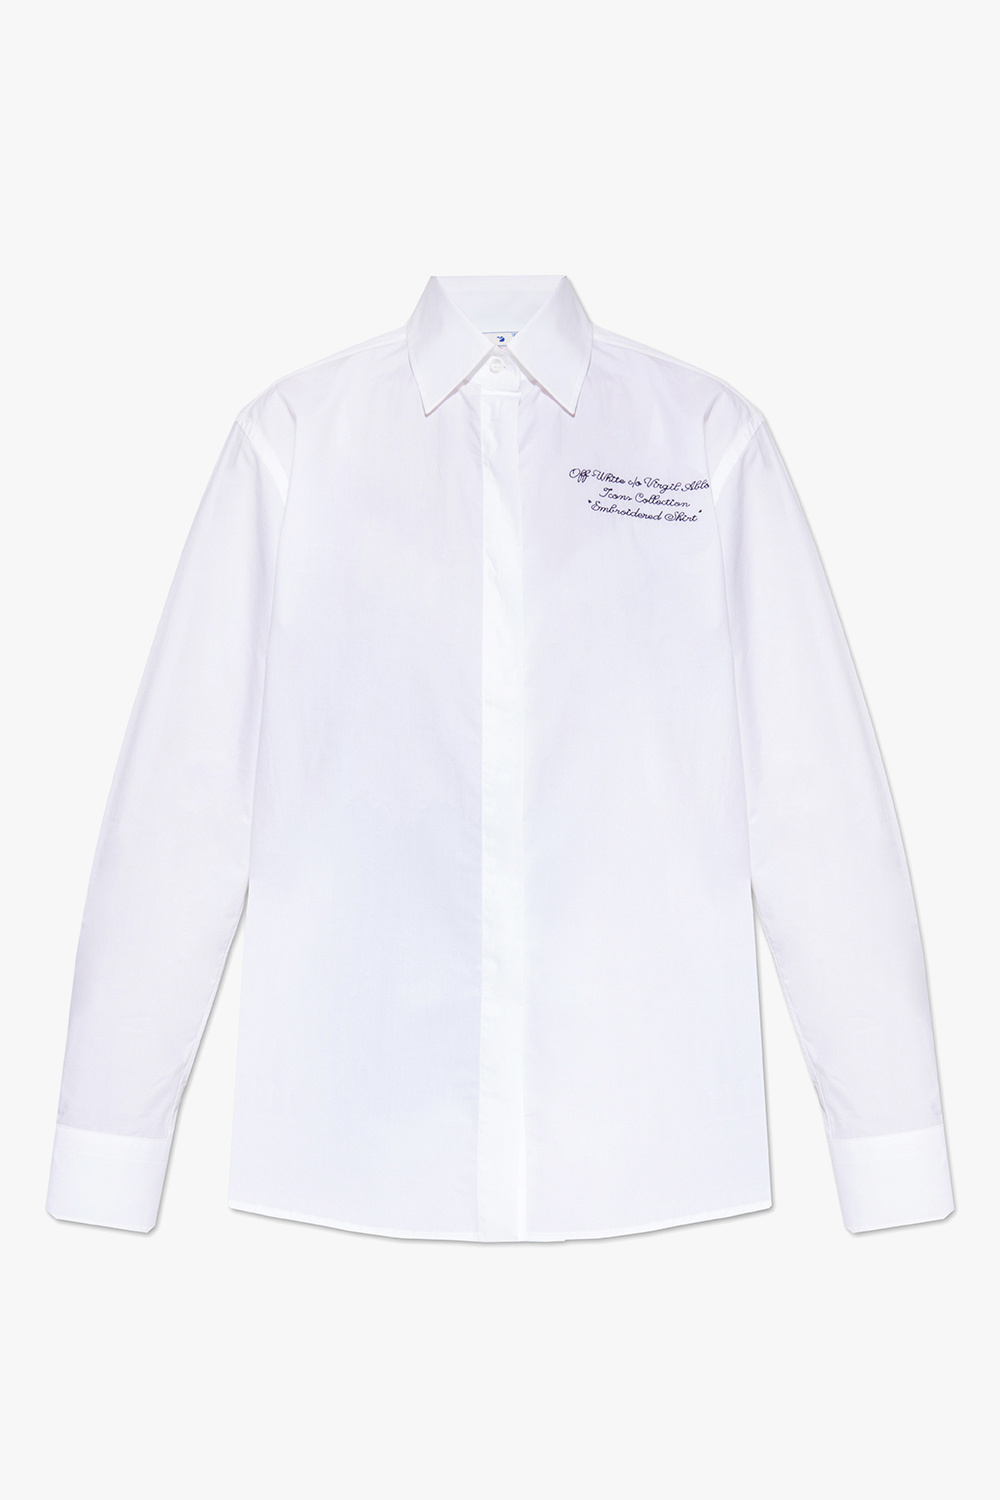 Off-White Embroidered Seasonal shirt